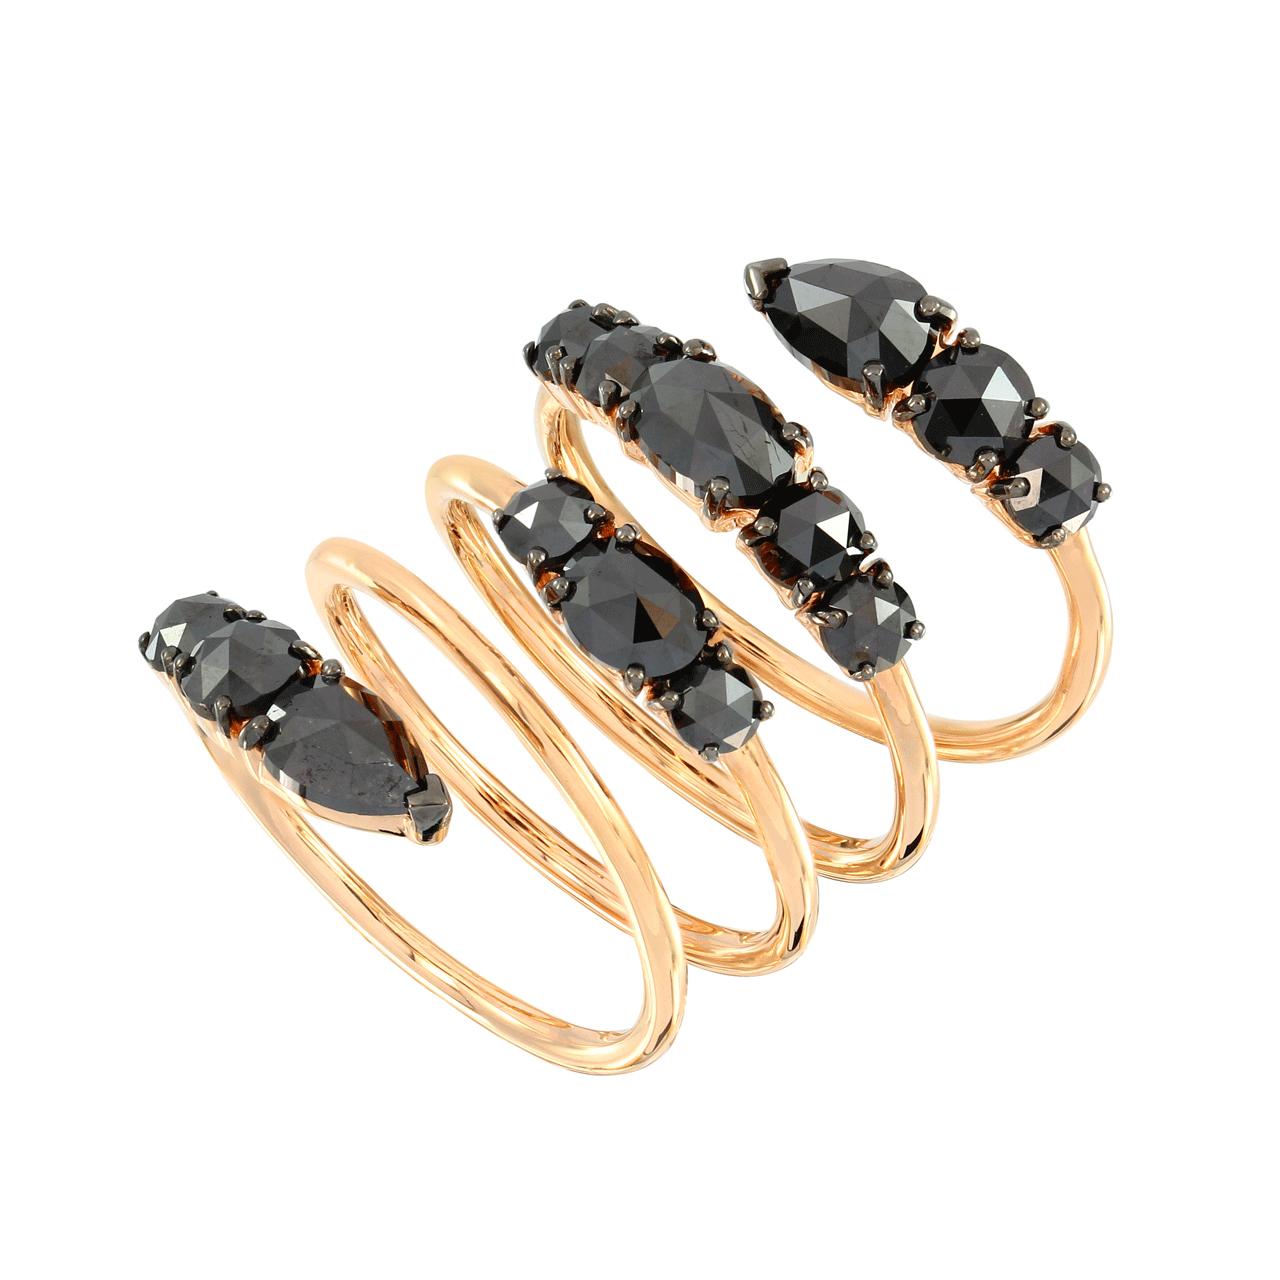  Sleek 18k rose gold wrap ring featuring 3.46 carats of mixed rose cut black diamonds.